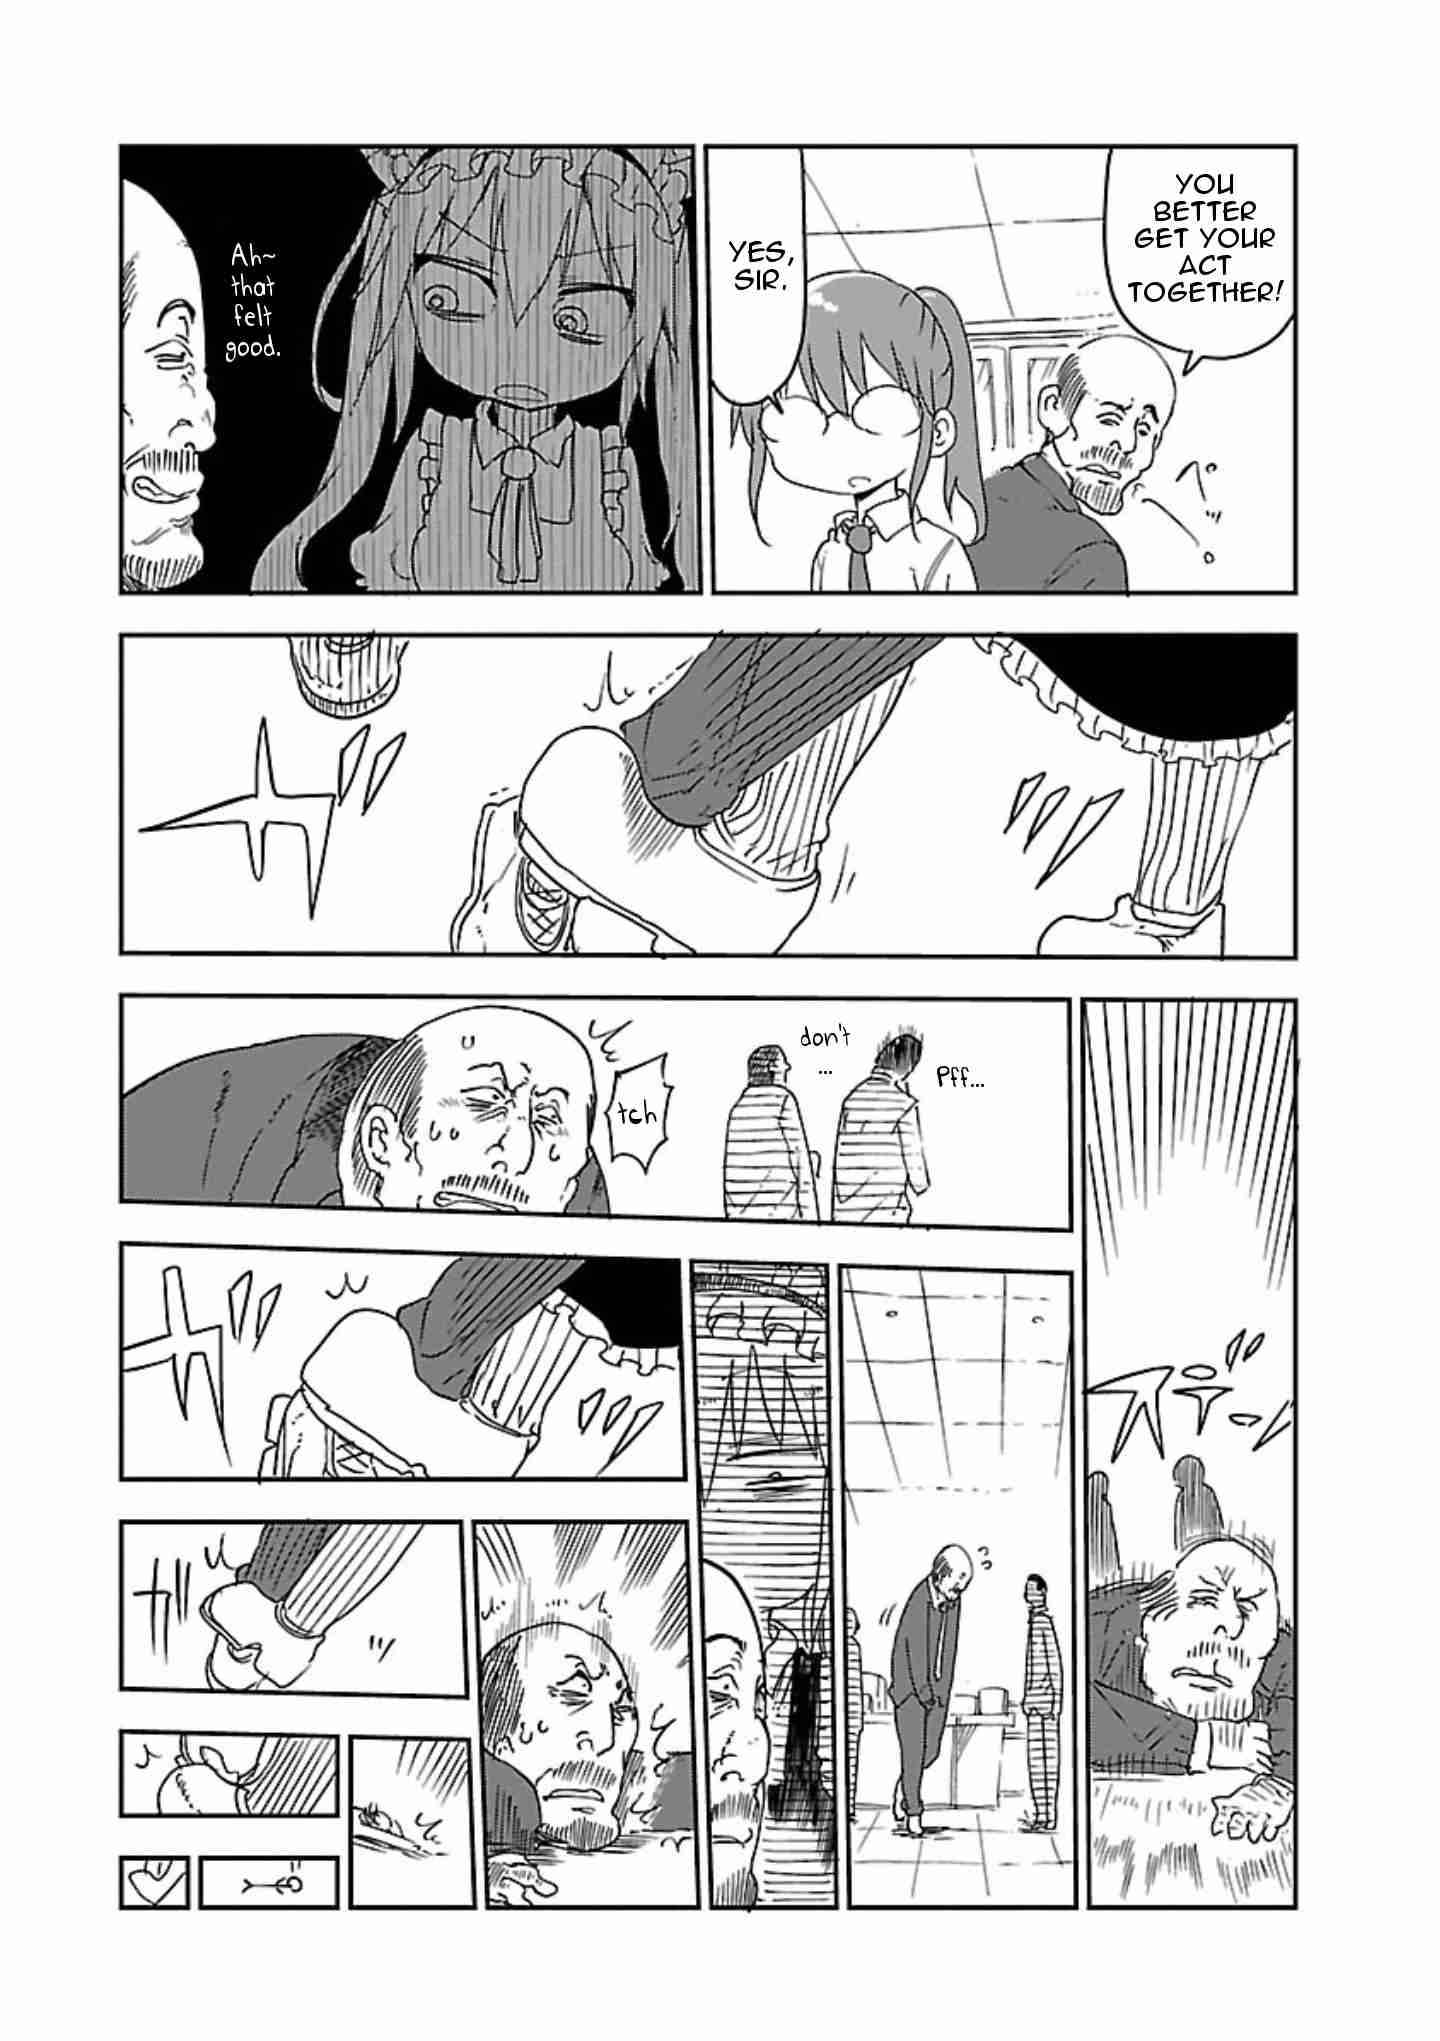 Kobayashi-san chi no Maid Dragon Vol.2 Ch.14